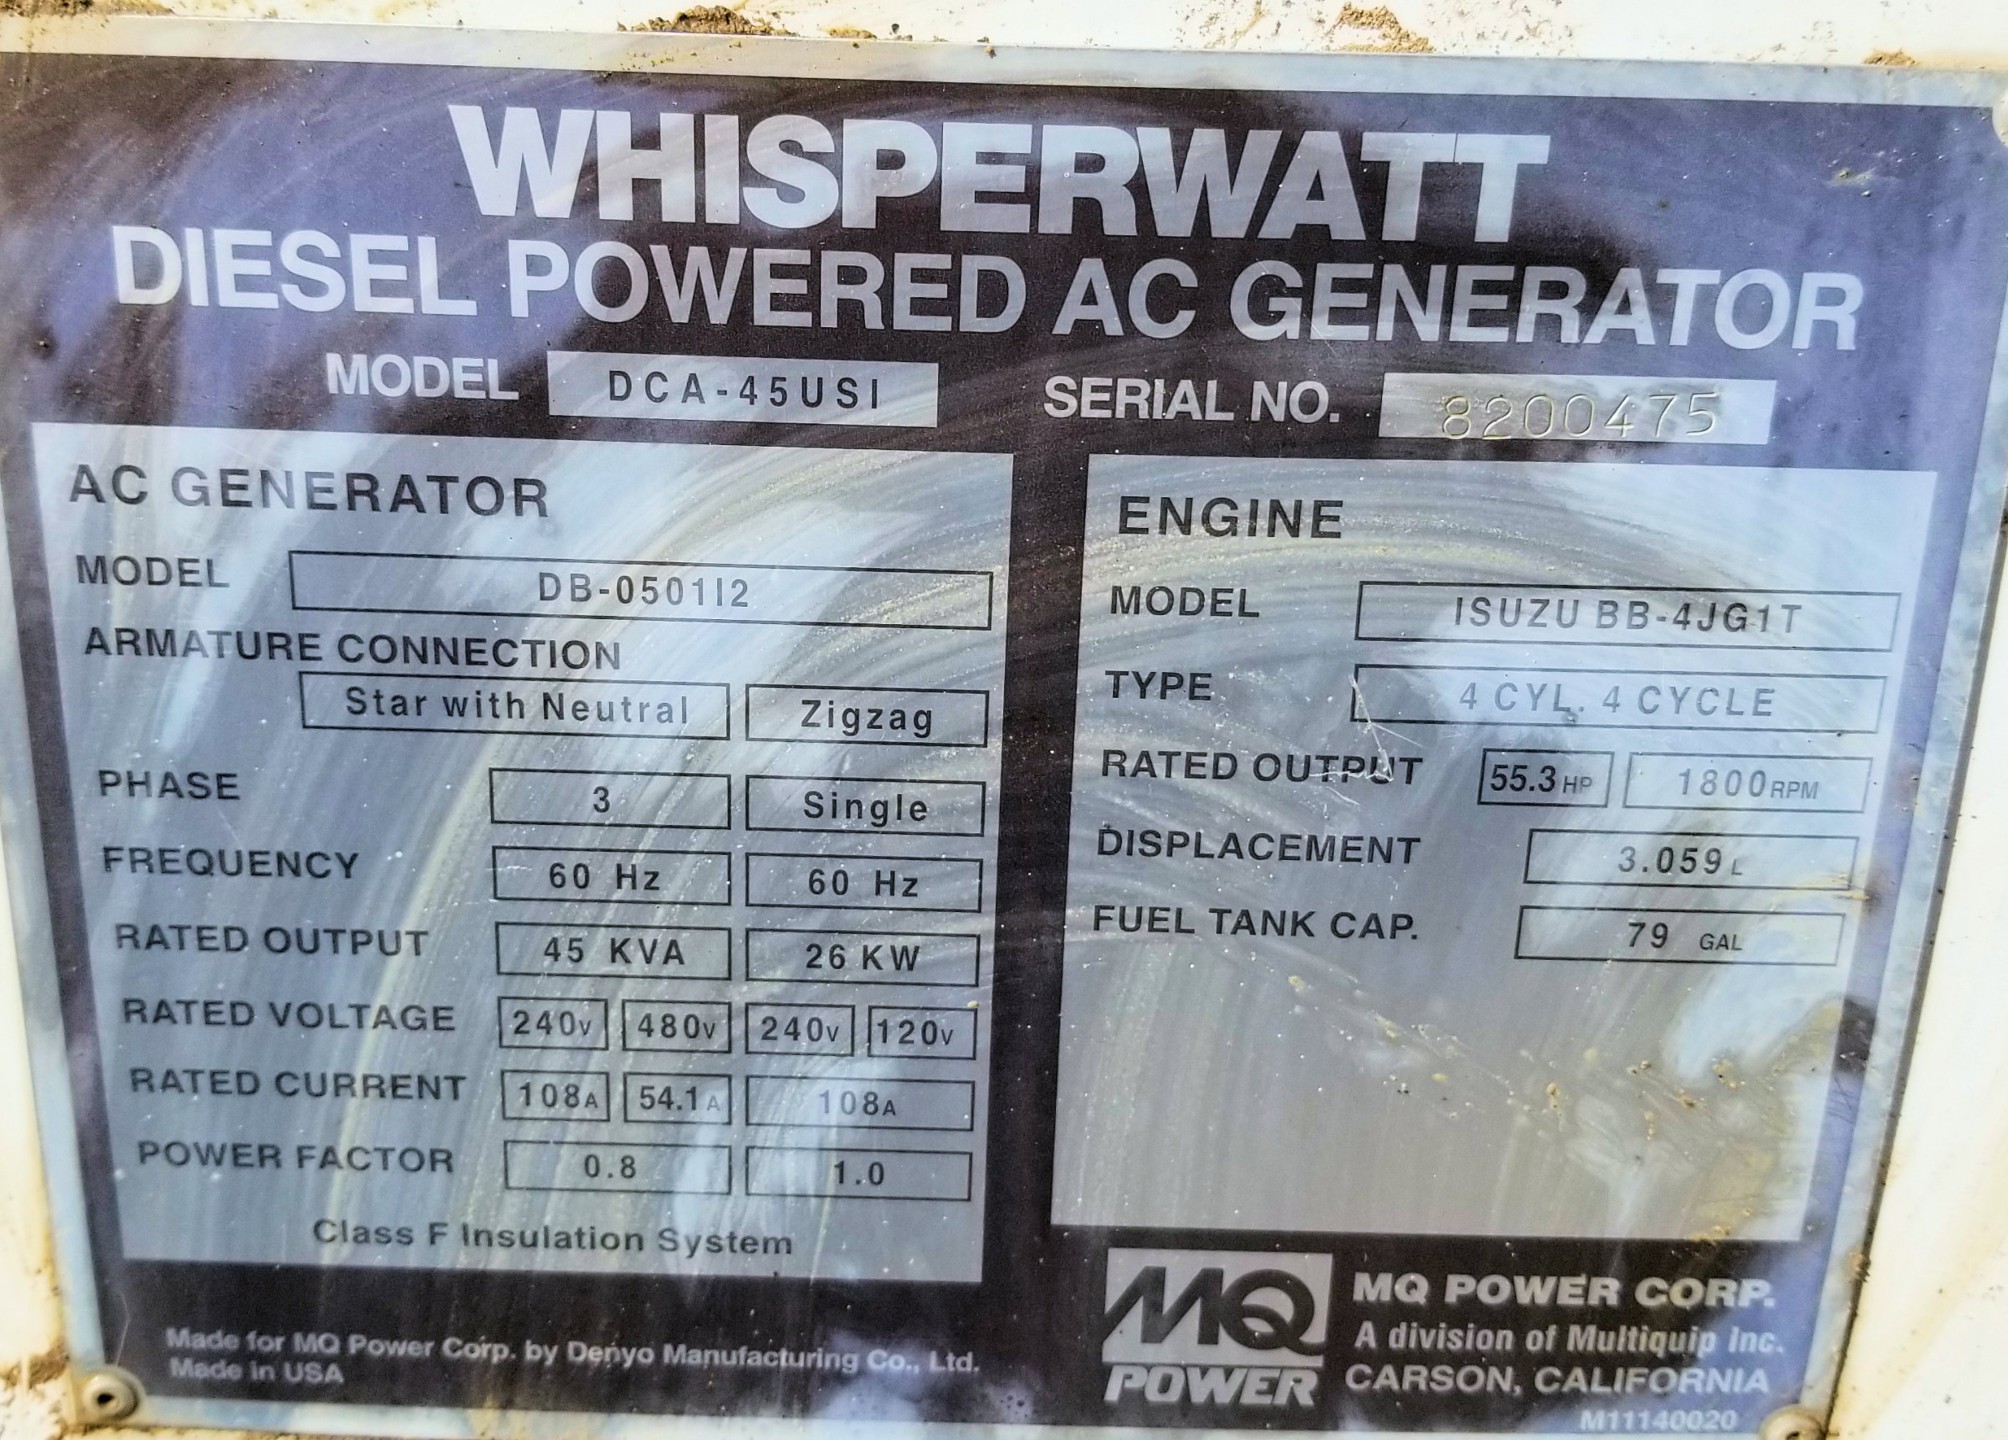 Whisperwatt Diesel Powered Ac Generator, Model Dca-45usi)